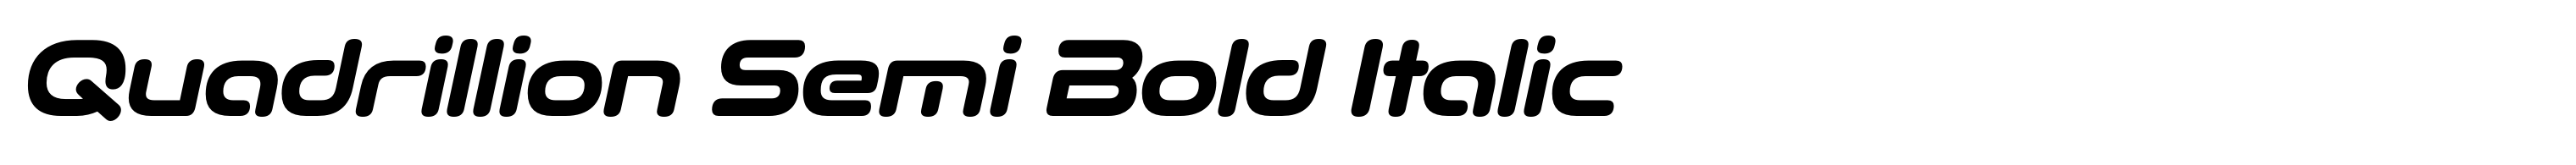 Quadrillion Semi Bold Italic